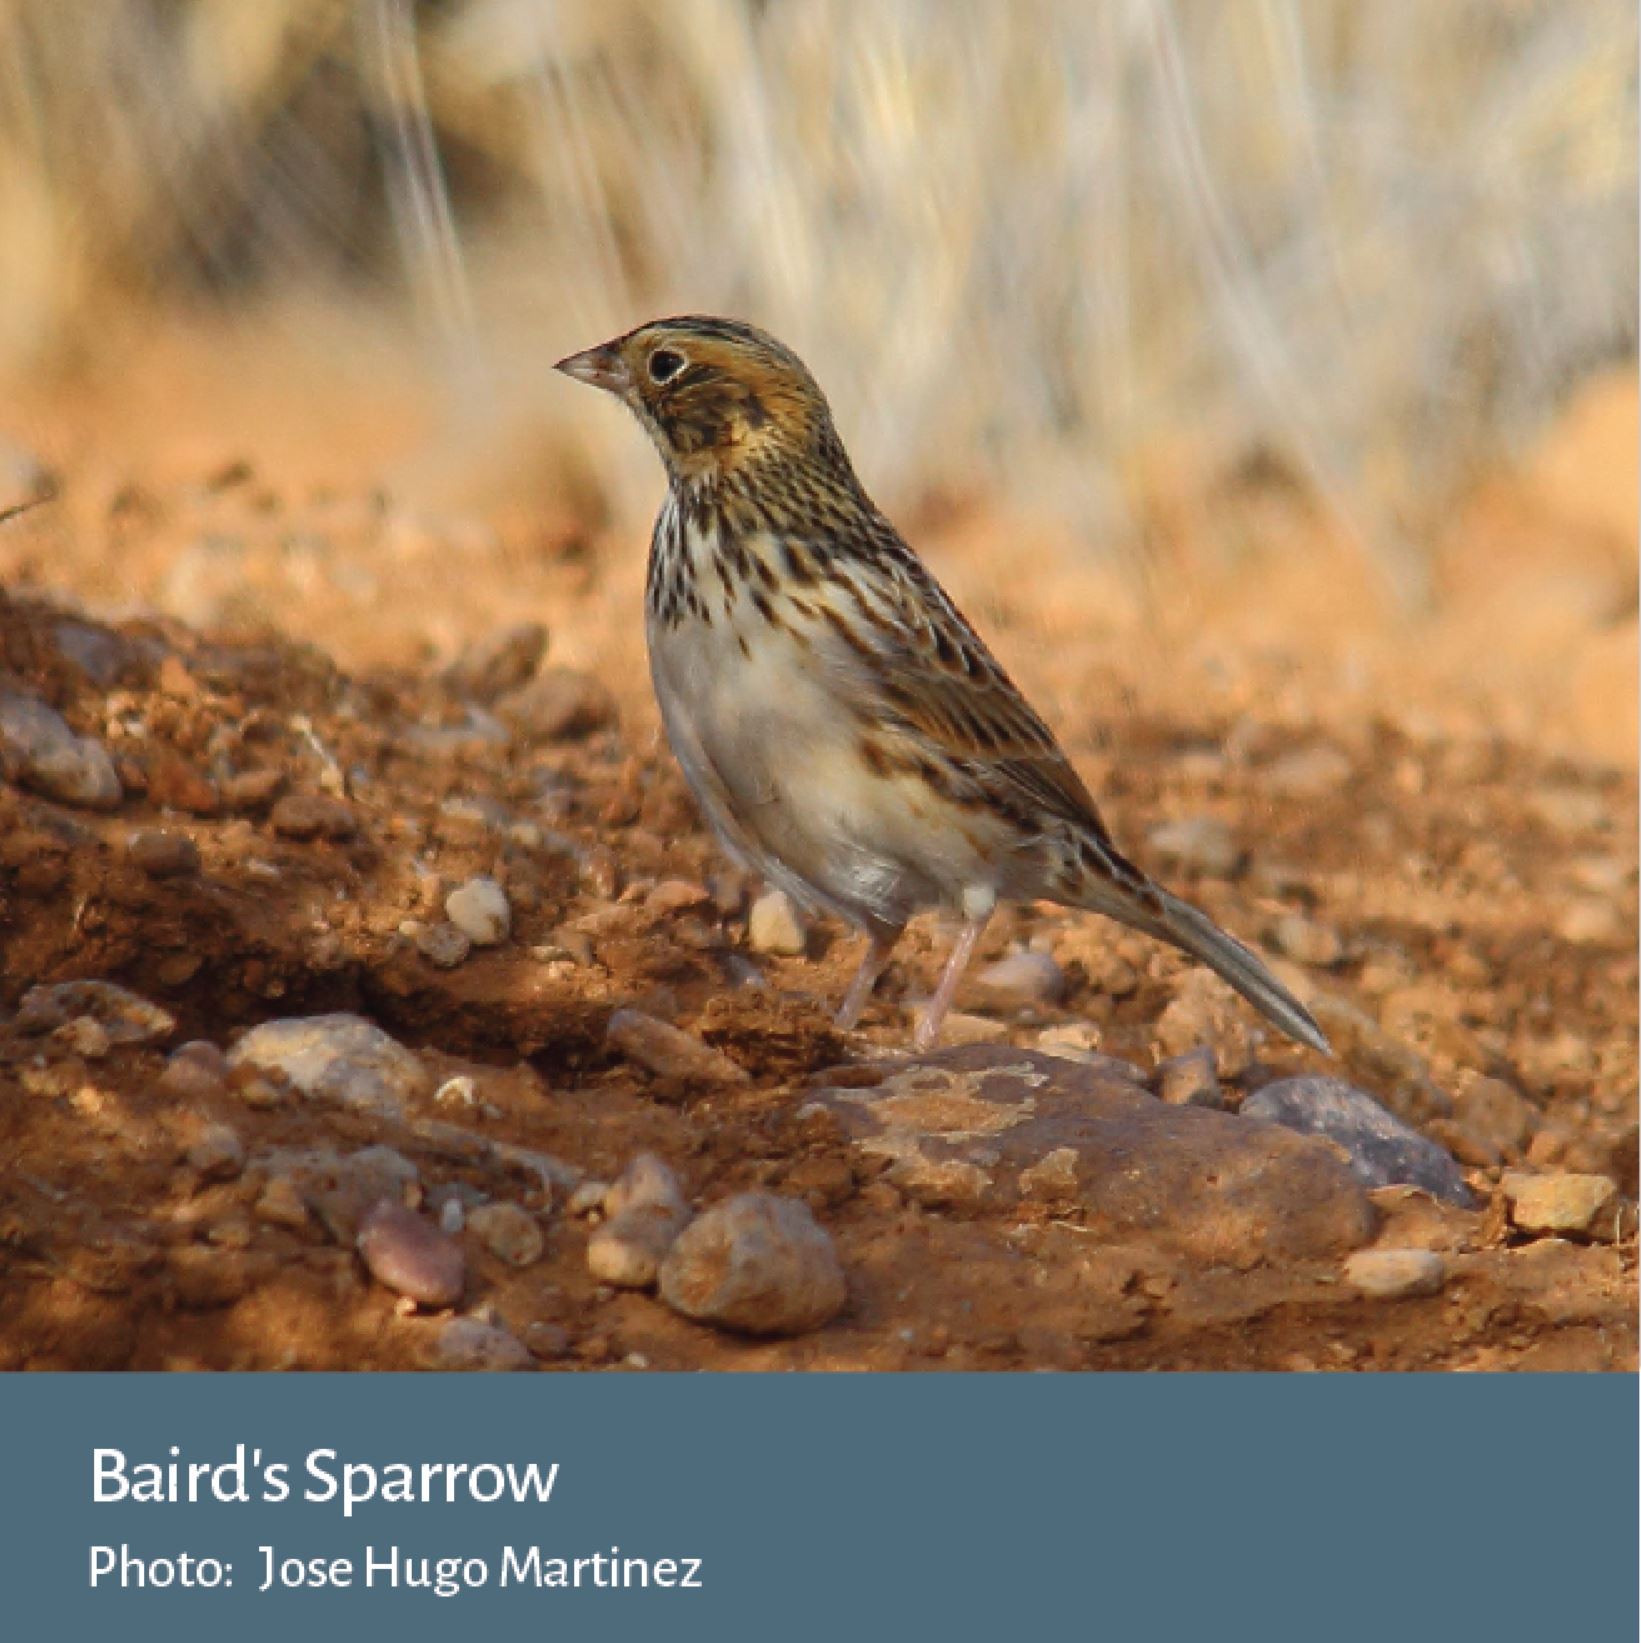 Baird's Sparrow - Photo by Jose Hugo Martinez